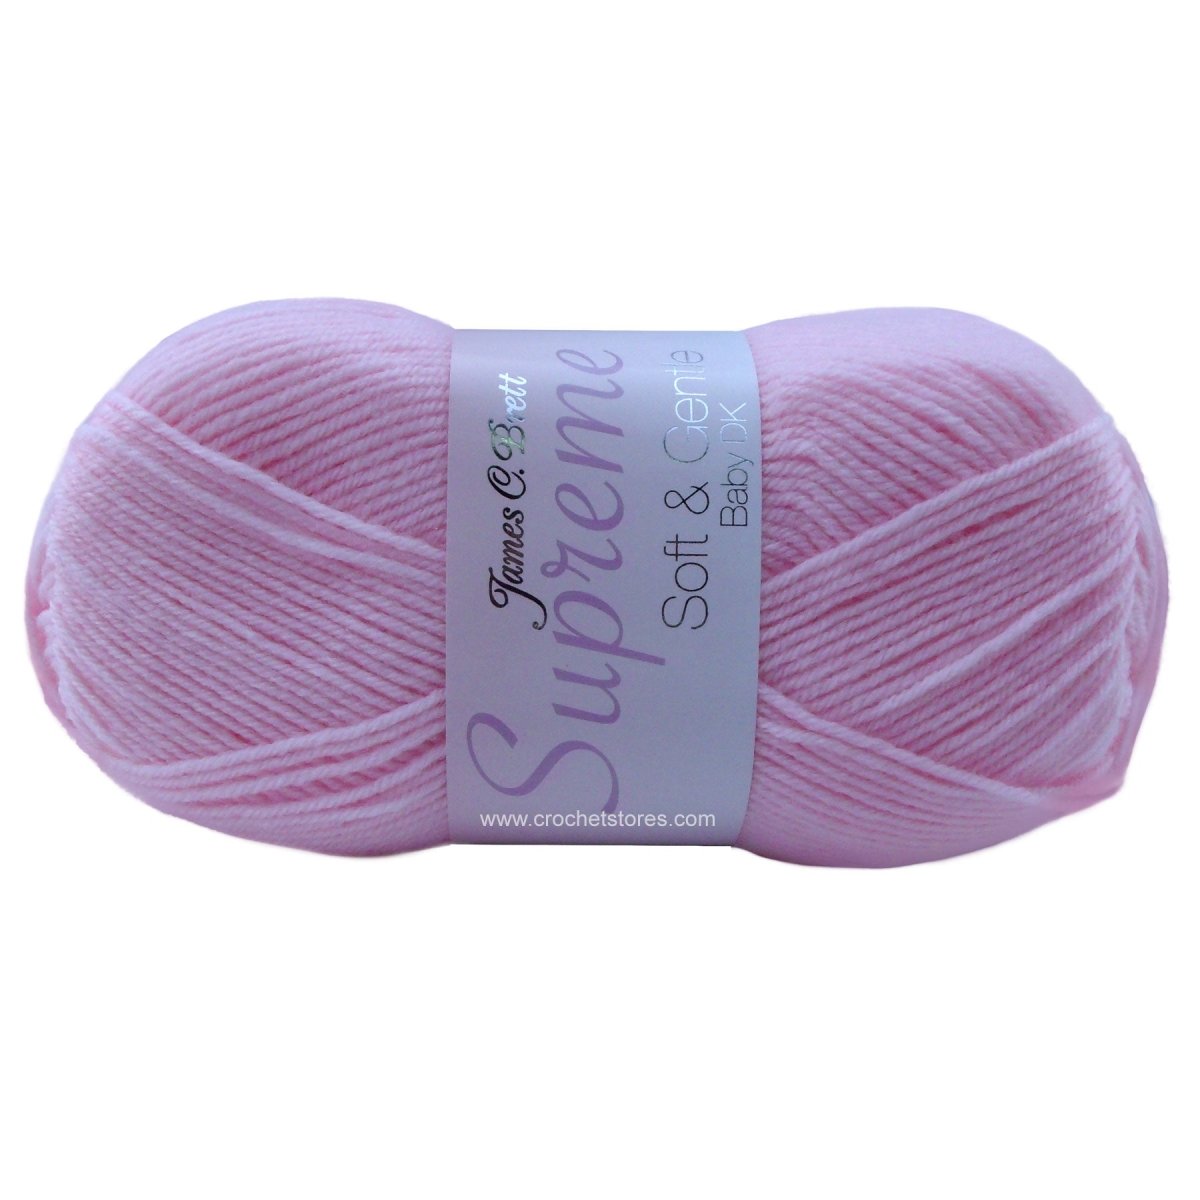 SUPREME BABY DK - CrochetstoresSNG185060019099650